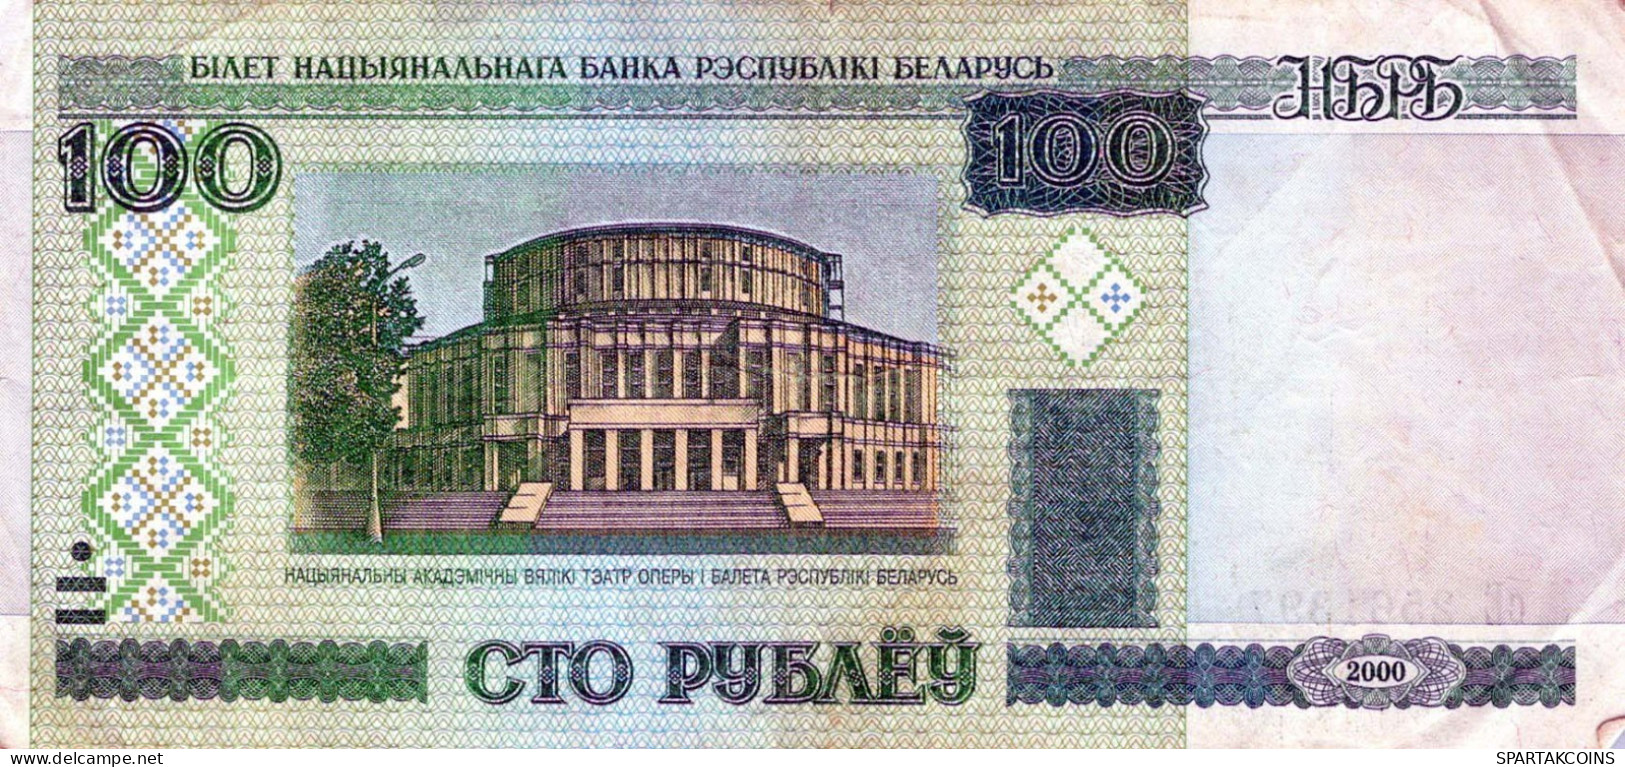 100 RUBLES 2000 BELARUS Papiergeld Banknote #PK608 - [11] Emissioni Locali